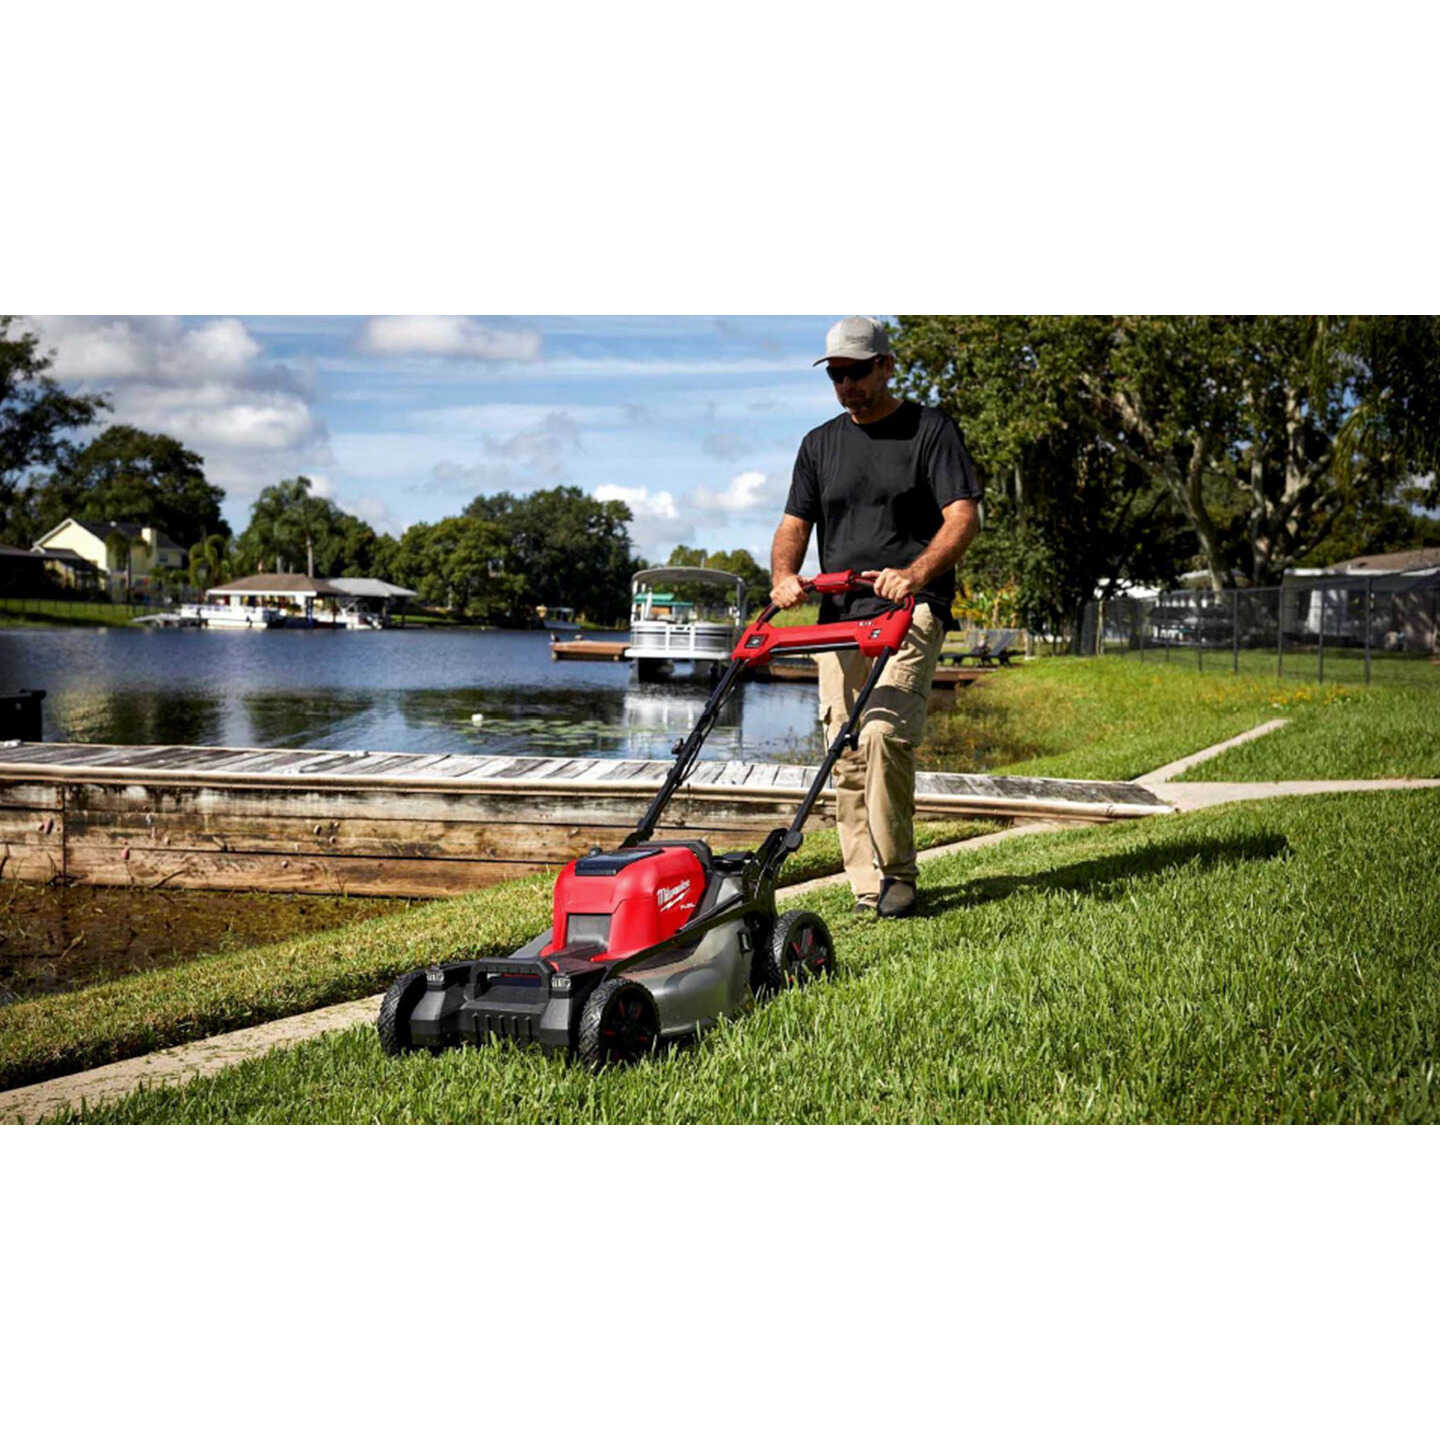 BLACK+DECKER 3-in-1 Cordless Lawn Mower Review - Best Cheap Walk Behind Lawn  Mowers 2020 #5 